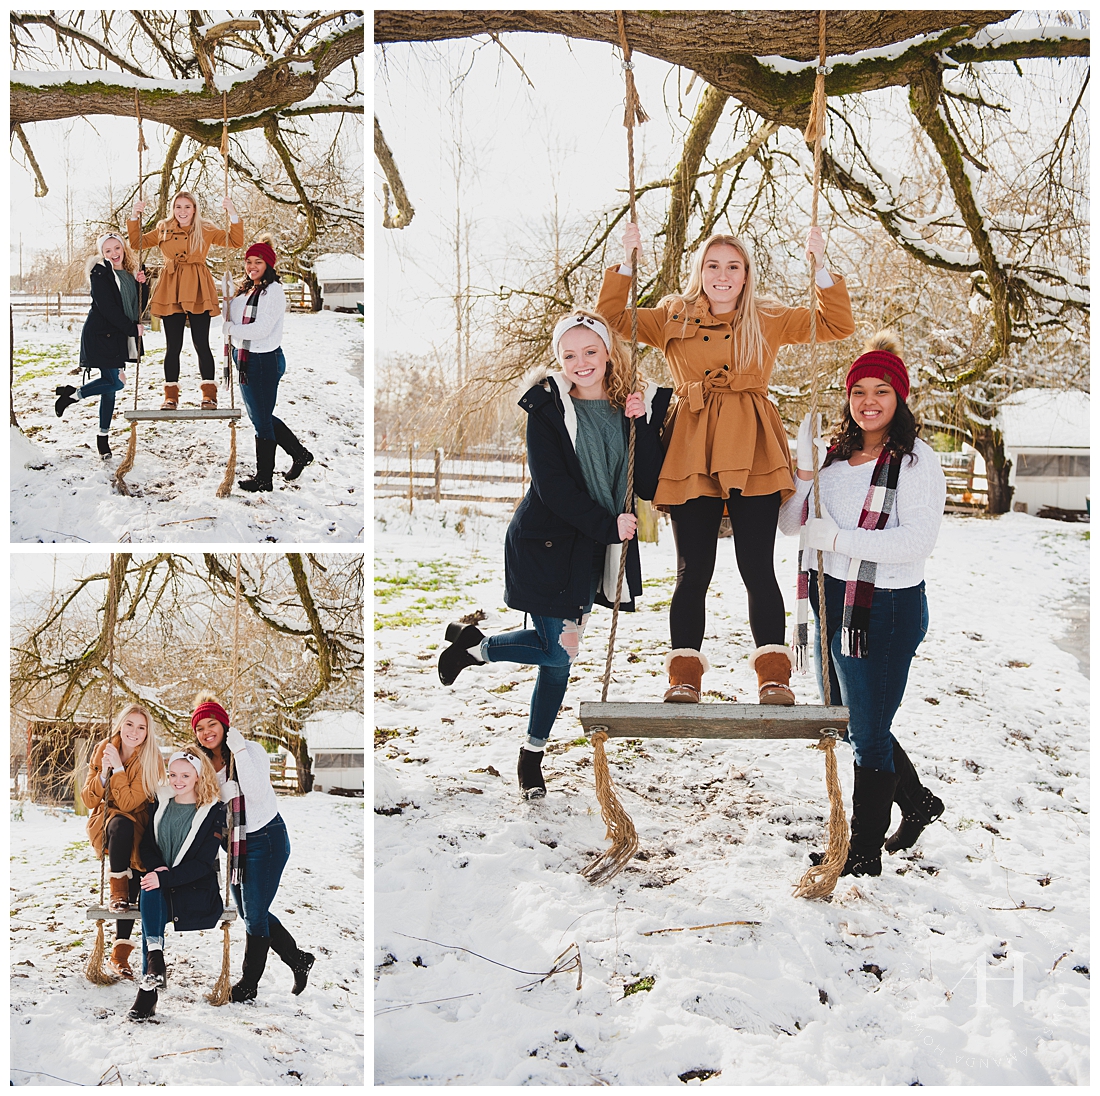 Wild Hearts Farm Tree Swing Portraits with AHP Senior Model Team Photographed by Tacoma Senior Photographer Amanda Howse